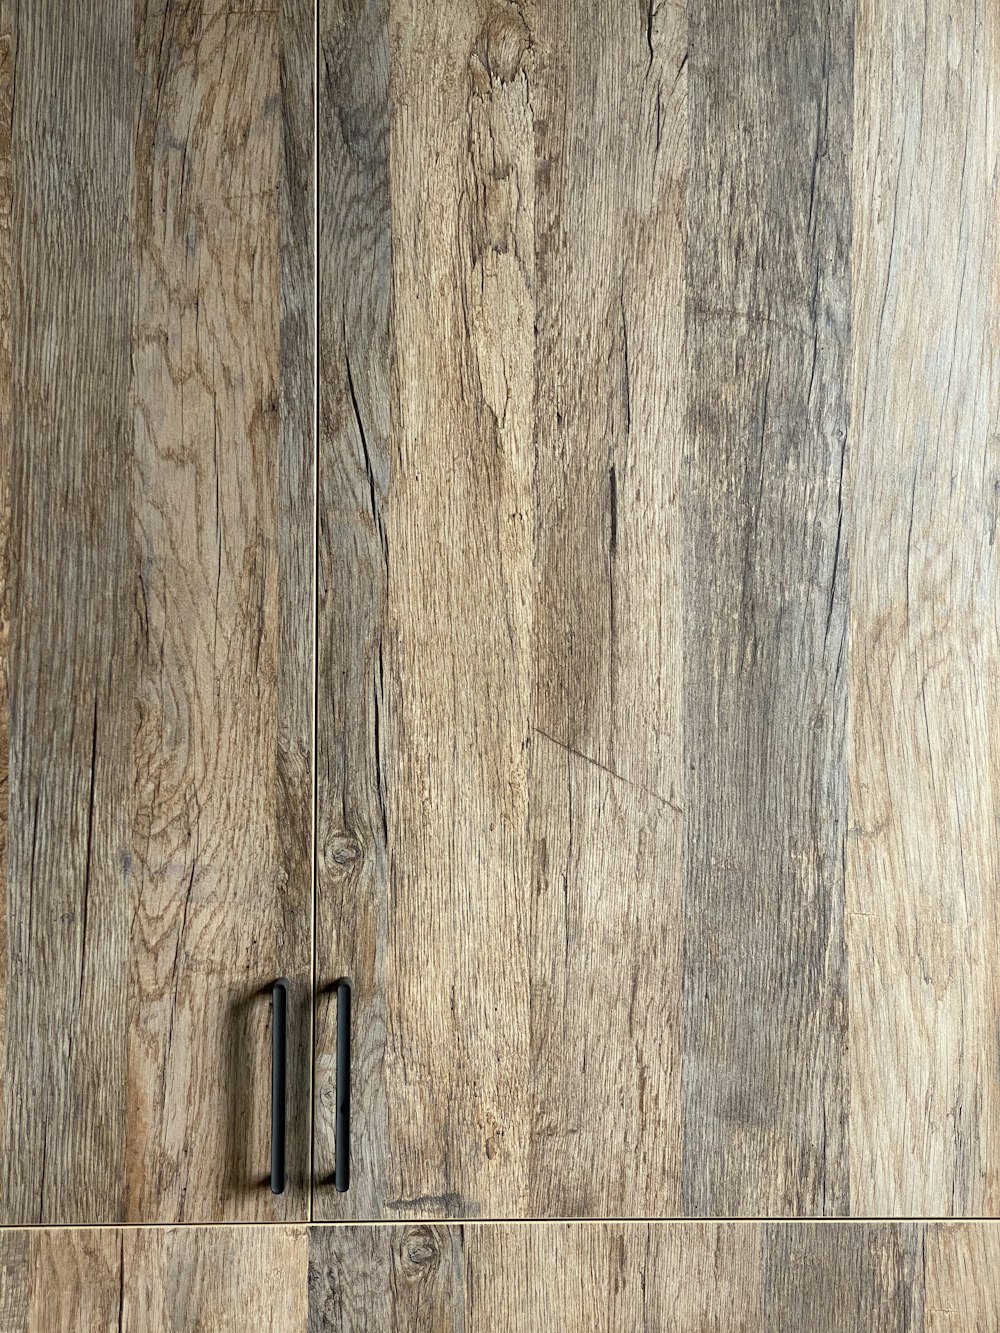 black metal door hinge on brown wooden surface